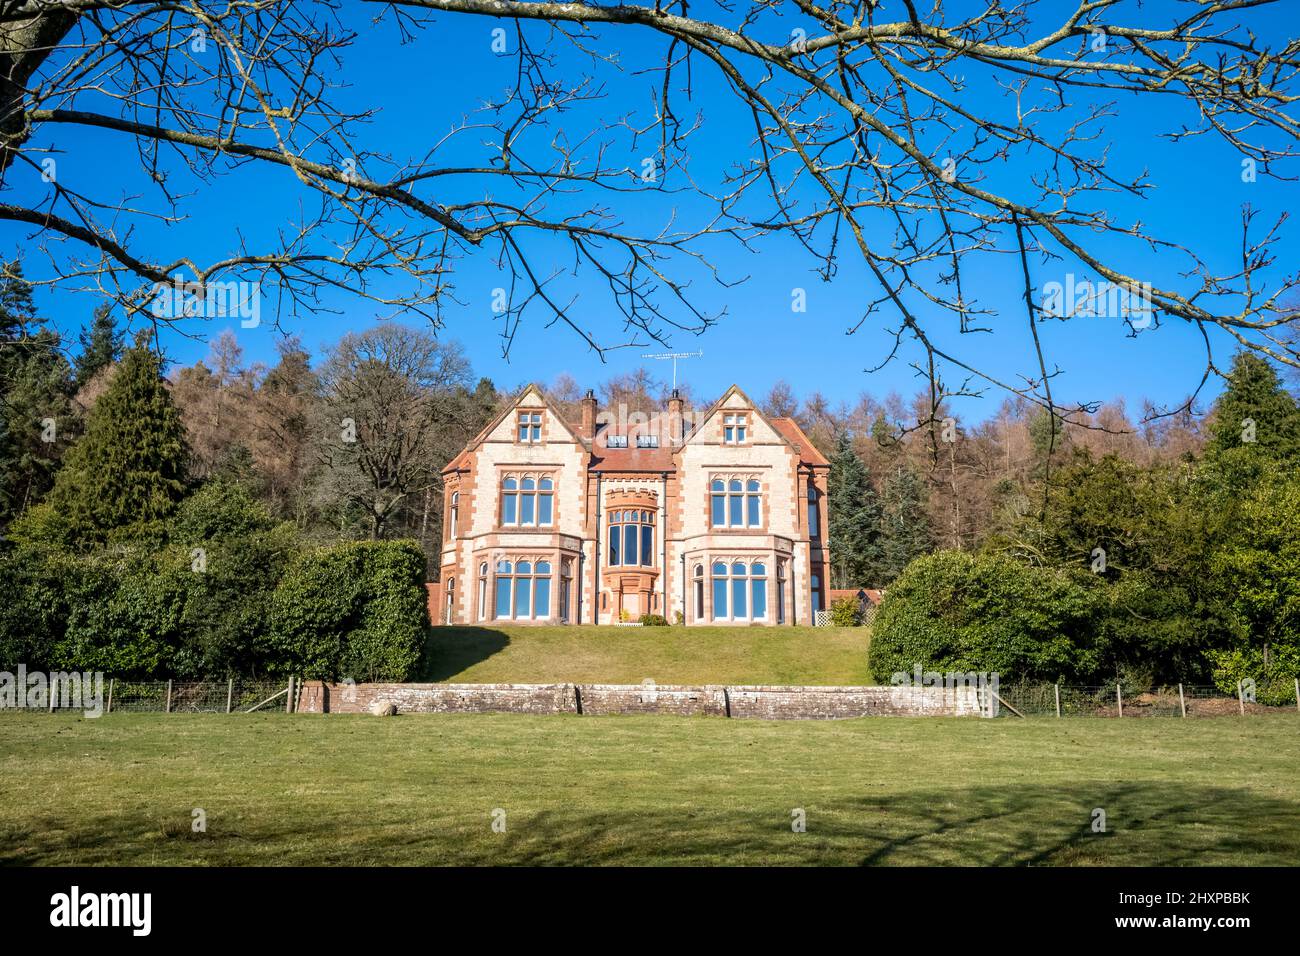 The imposing  house 'Nandana' on Beacon Hill, Penrith, Cumbria Stock Photo